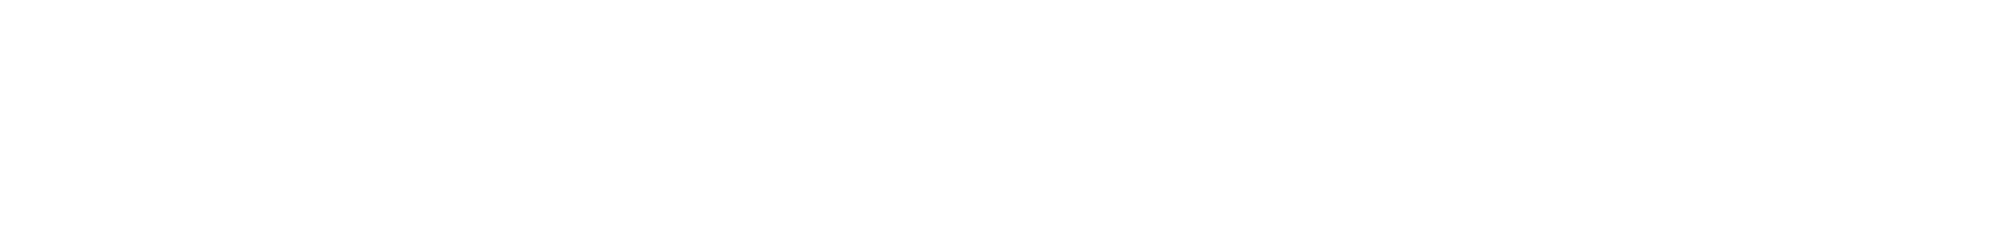 Logo-battenberg